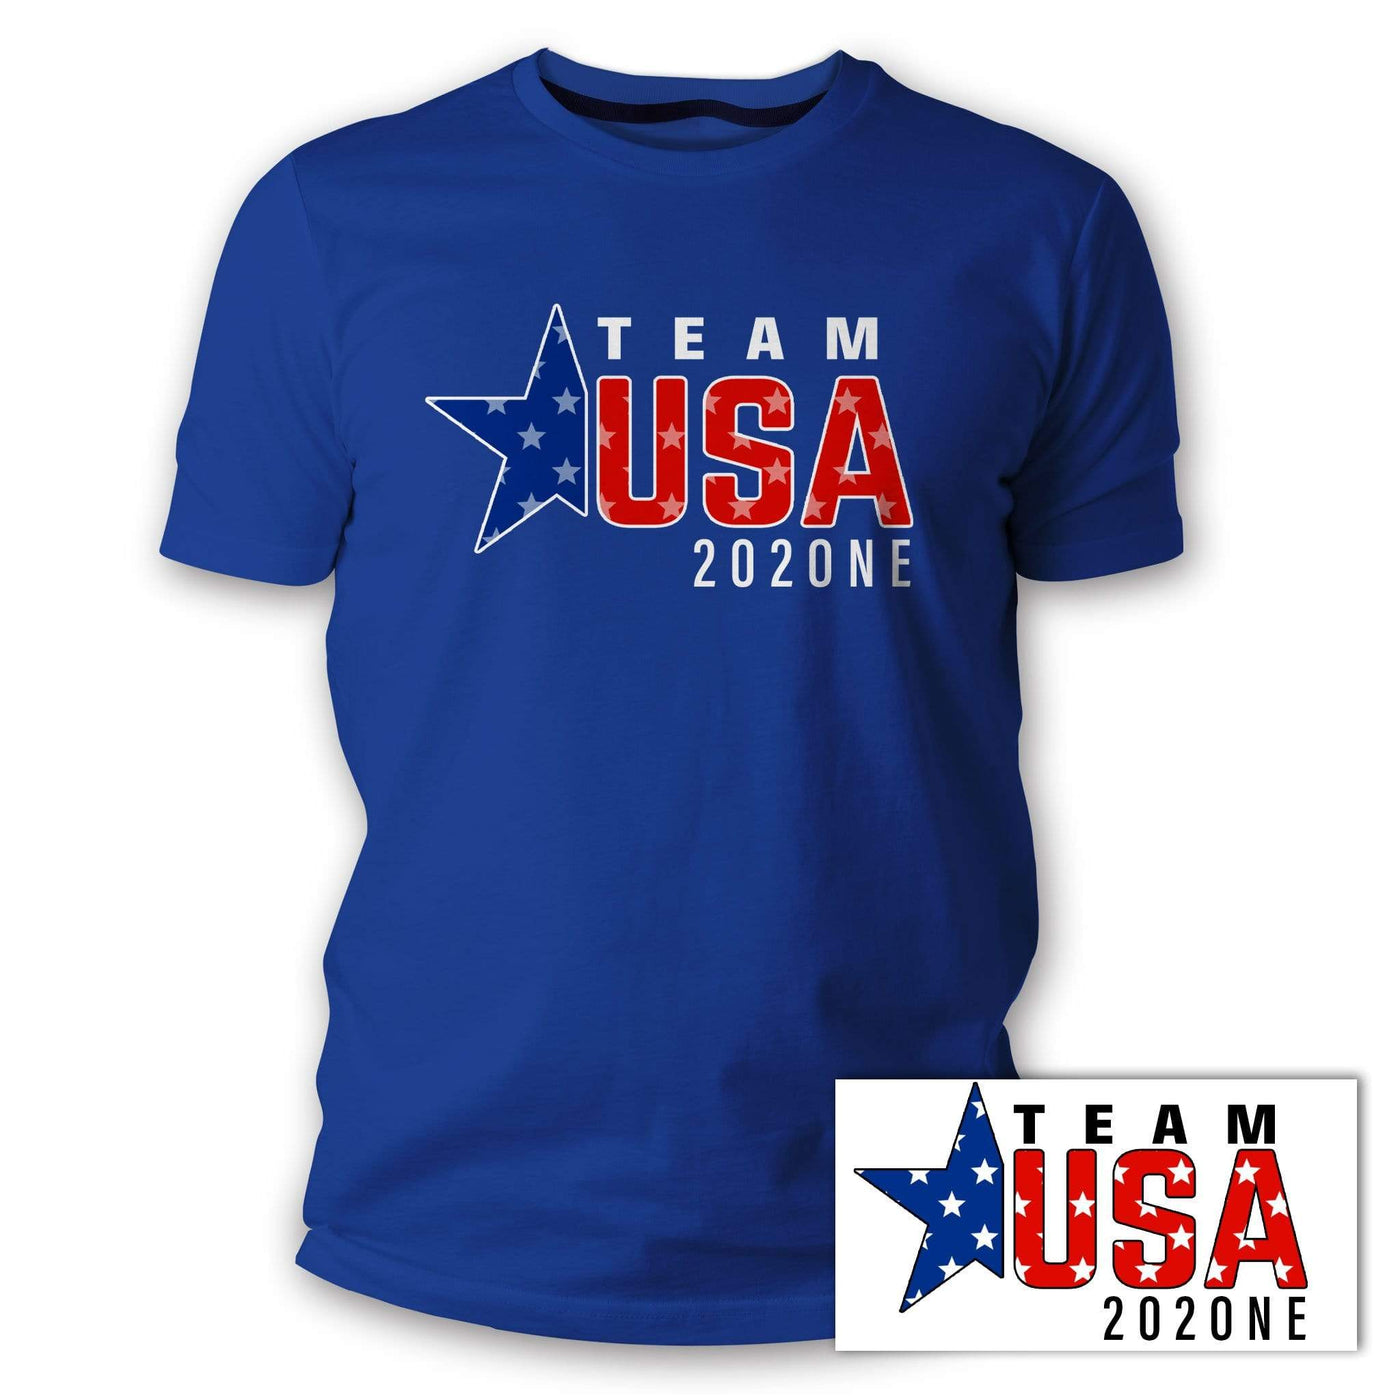 Team USA Blue T Shirt with Vinyl Sticker